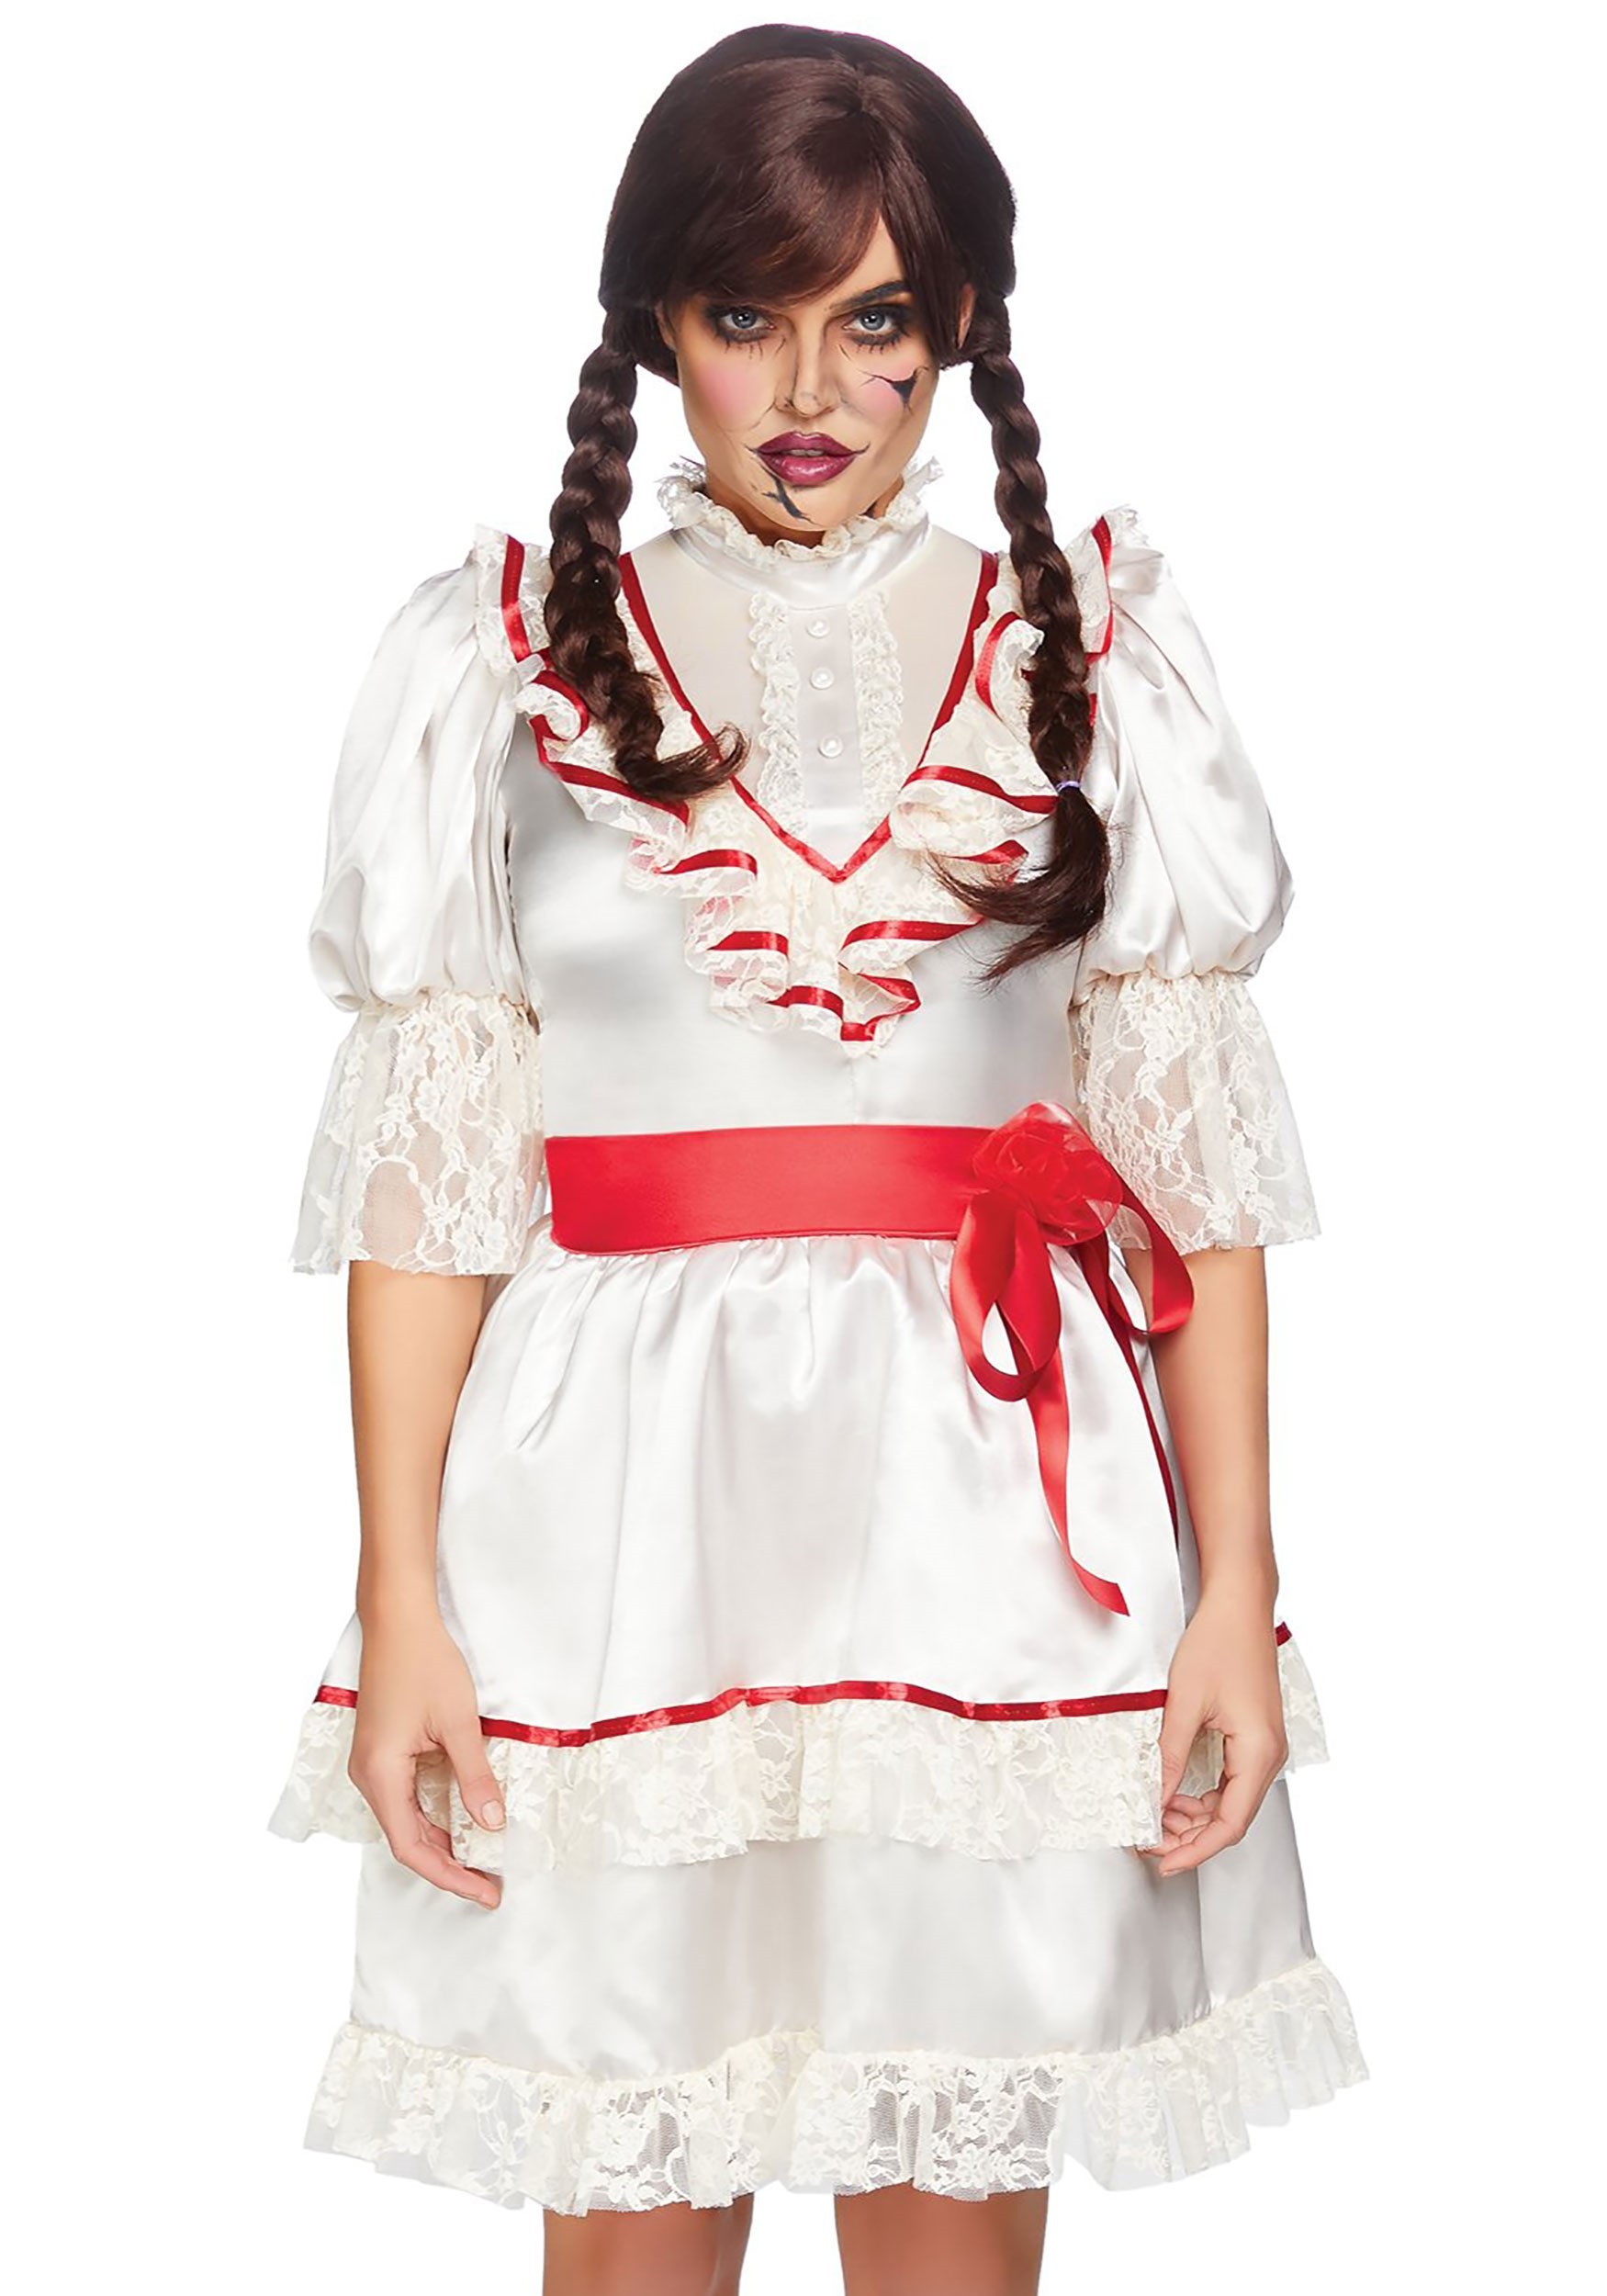 Haunted Doll Dress Women's Costume